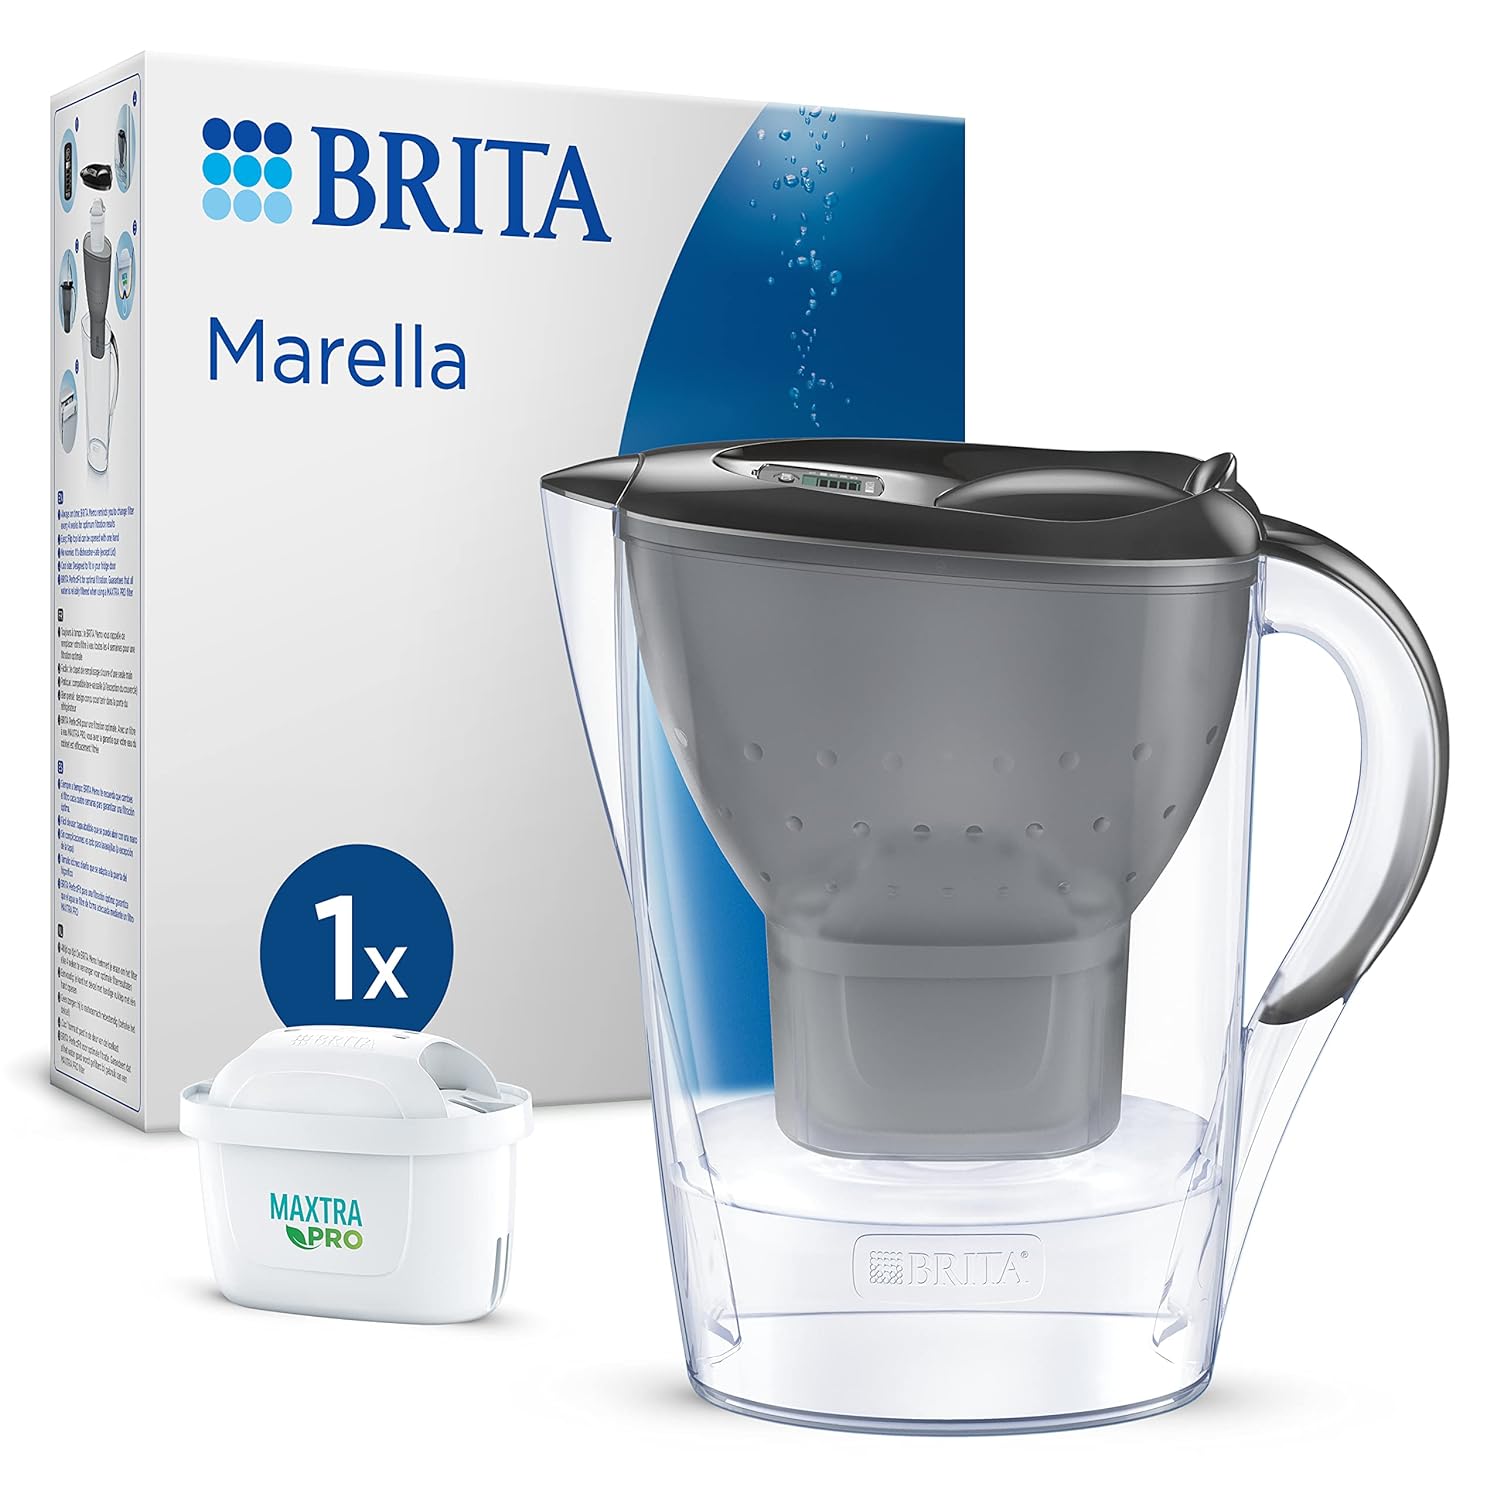 Brita Marella MAXTRA Pro Water Filter Jug - MicroFlow Technology - 2.4L, Graphite